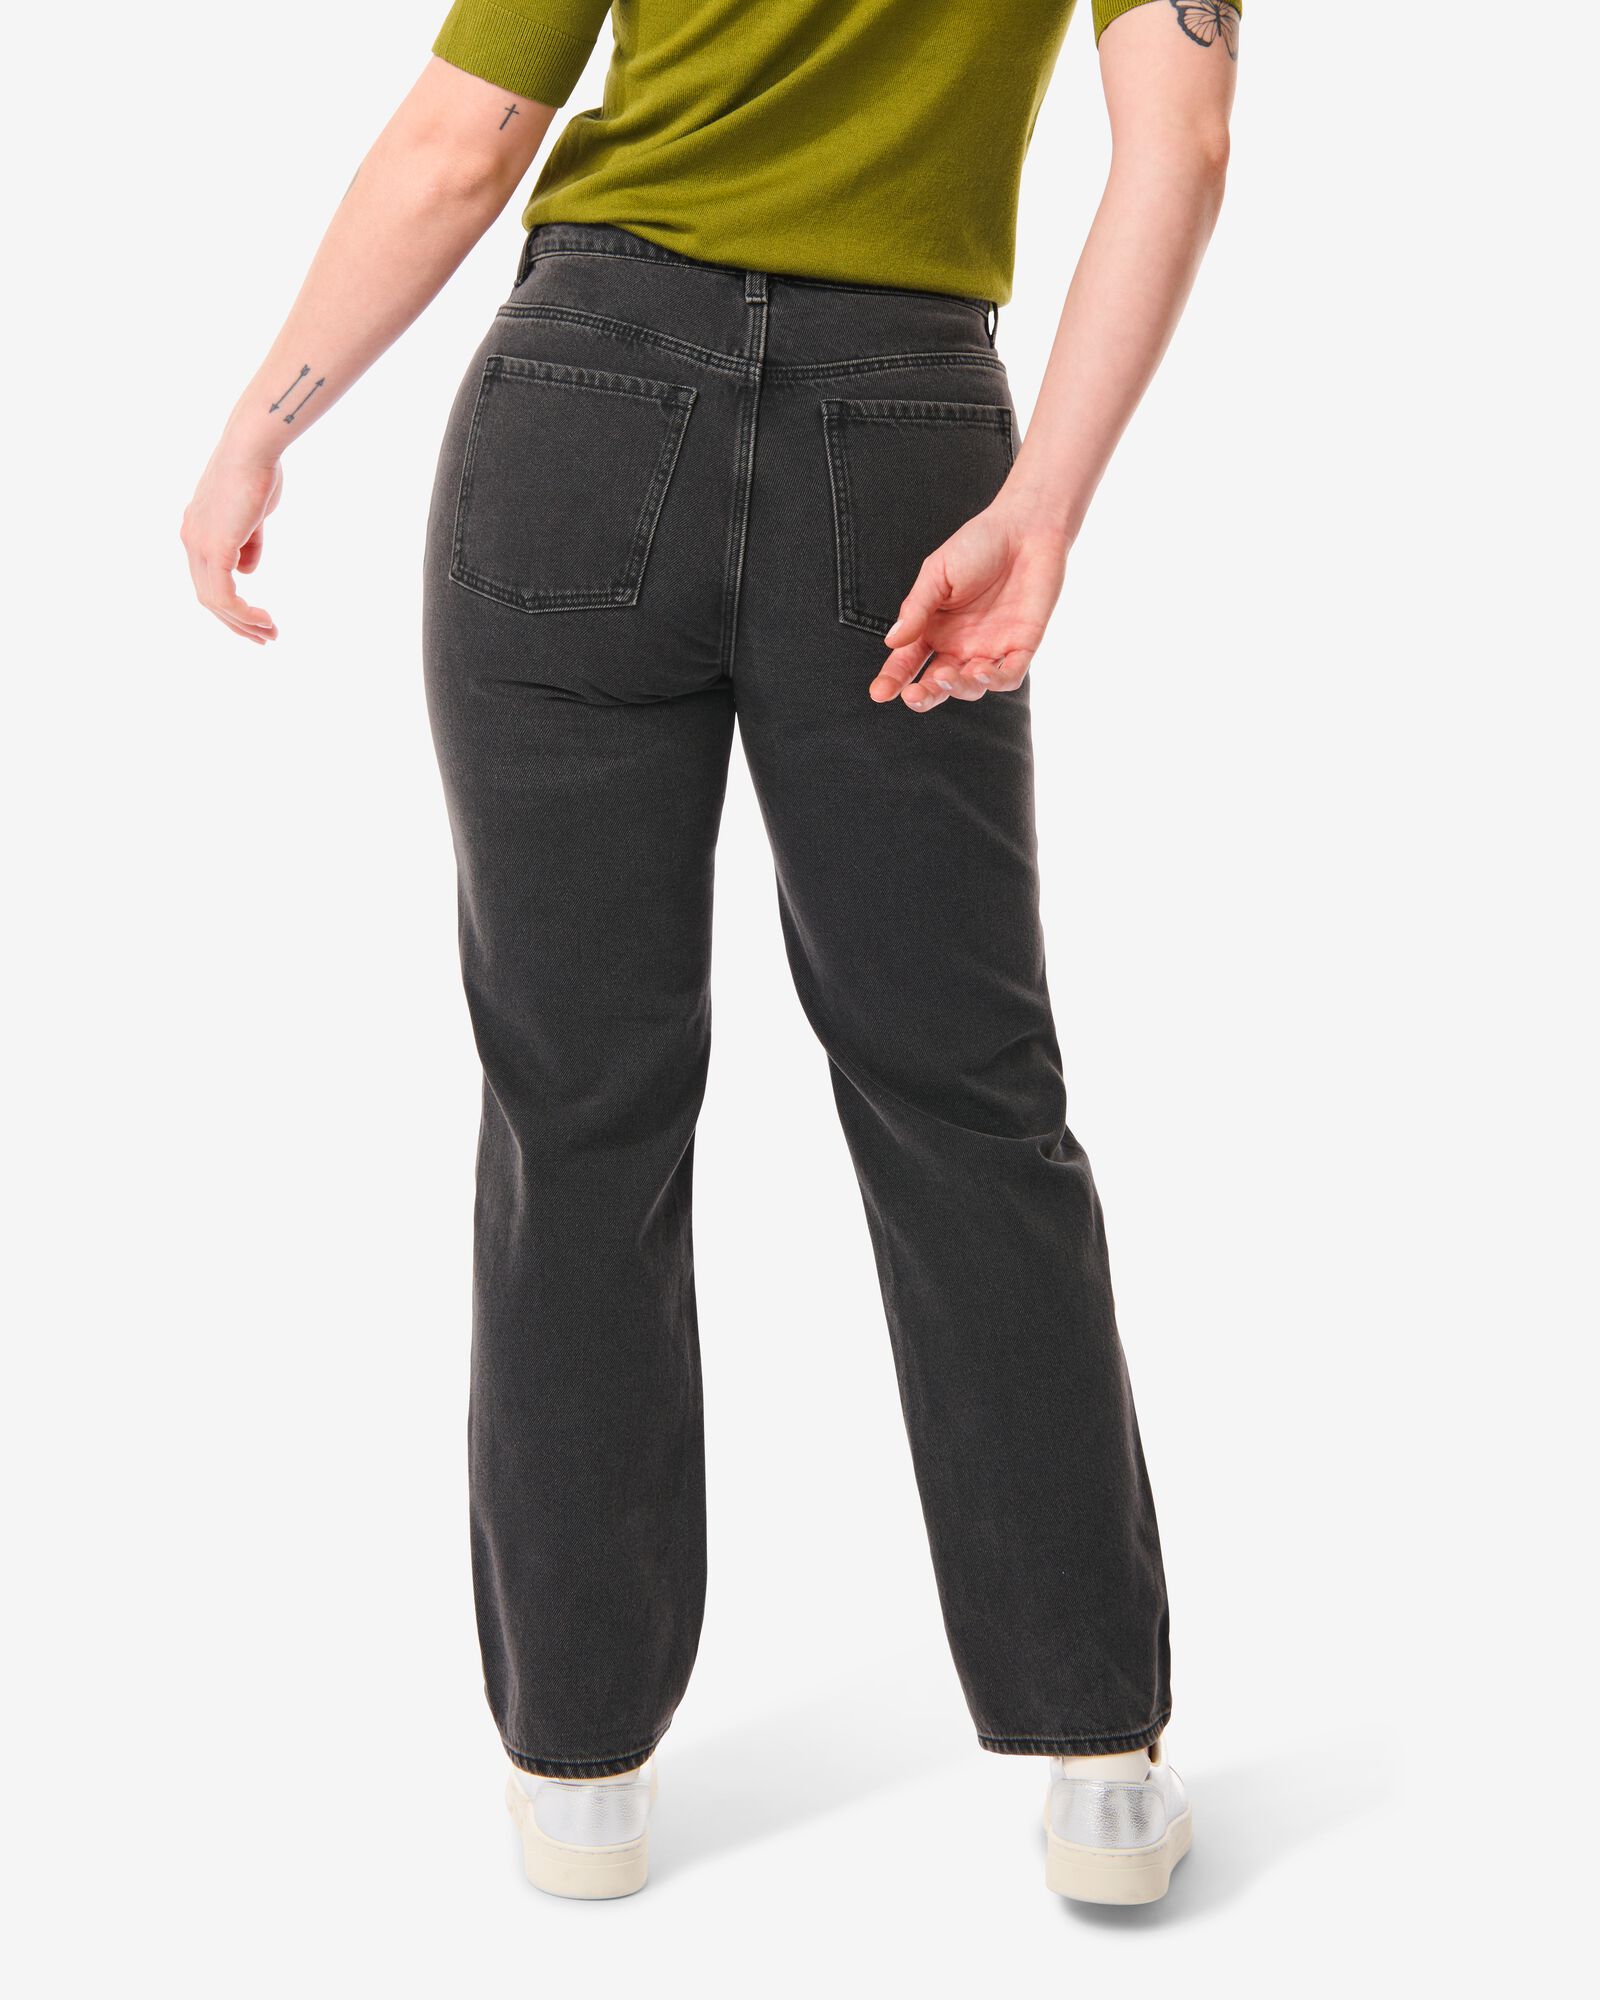 Damen-Jeans, Straight Fit dunkelgrau 44 - 36319985 - HEMA